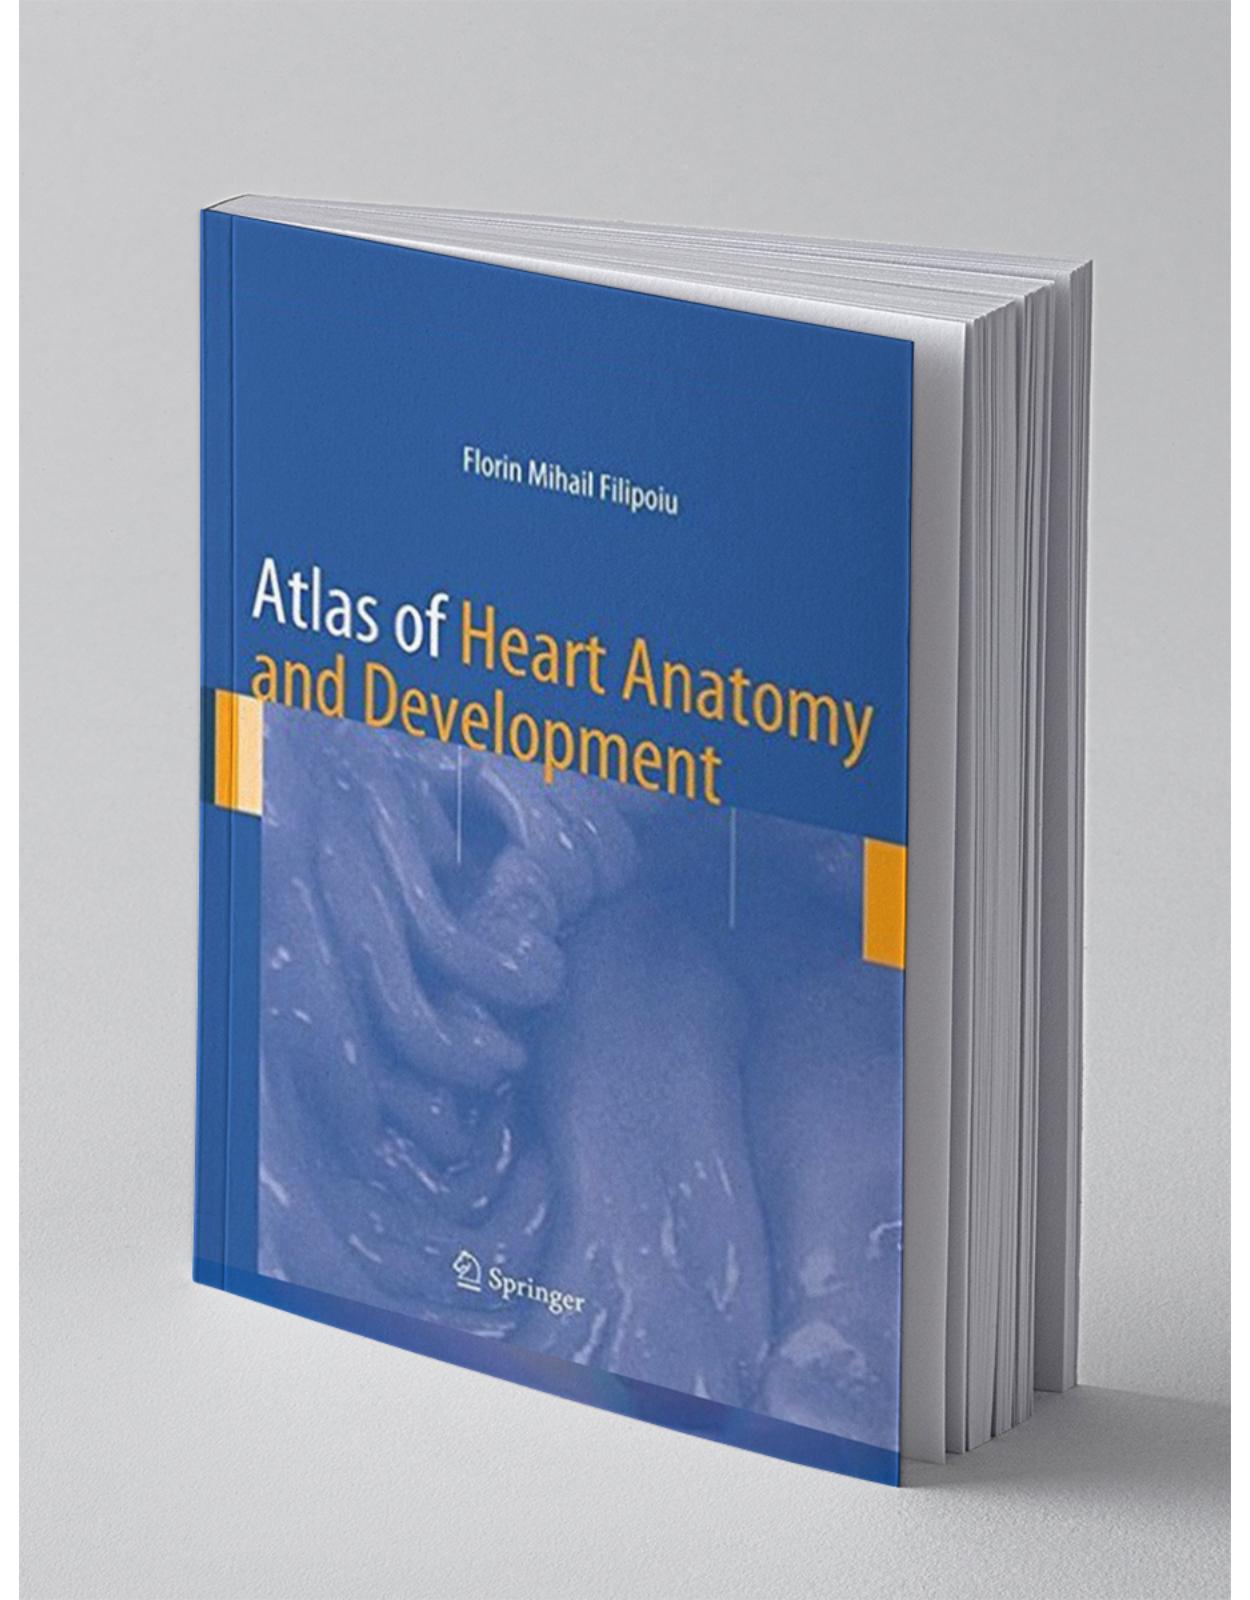  Atlas of Heart Anatomy and Development